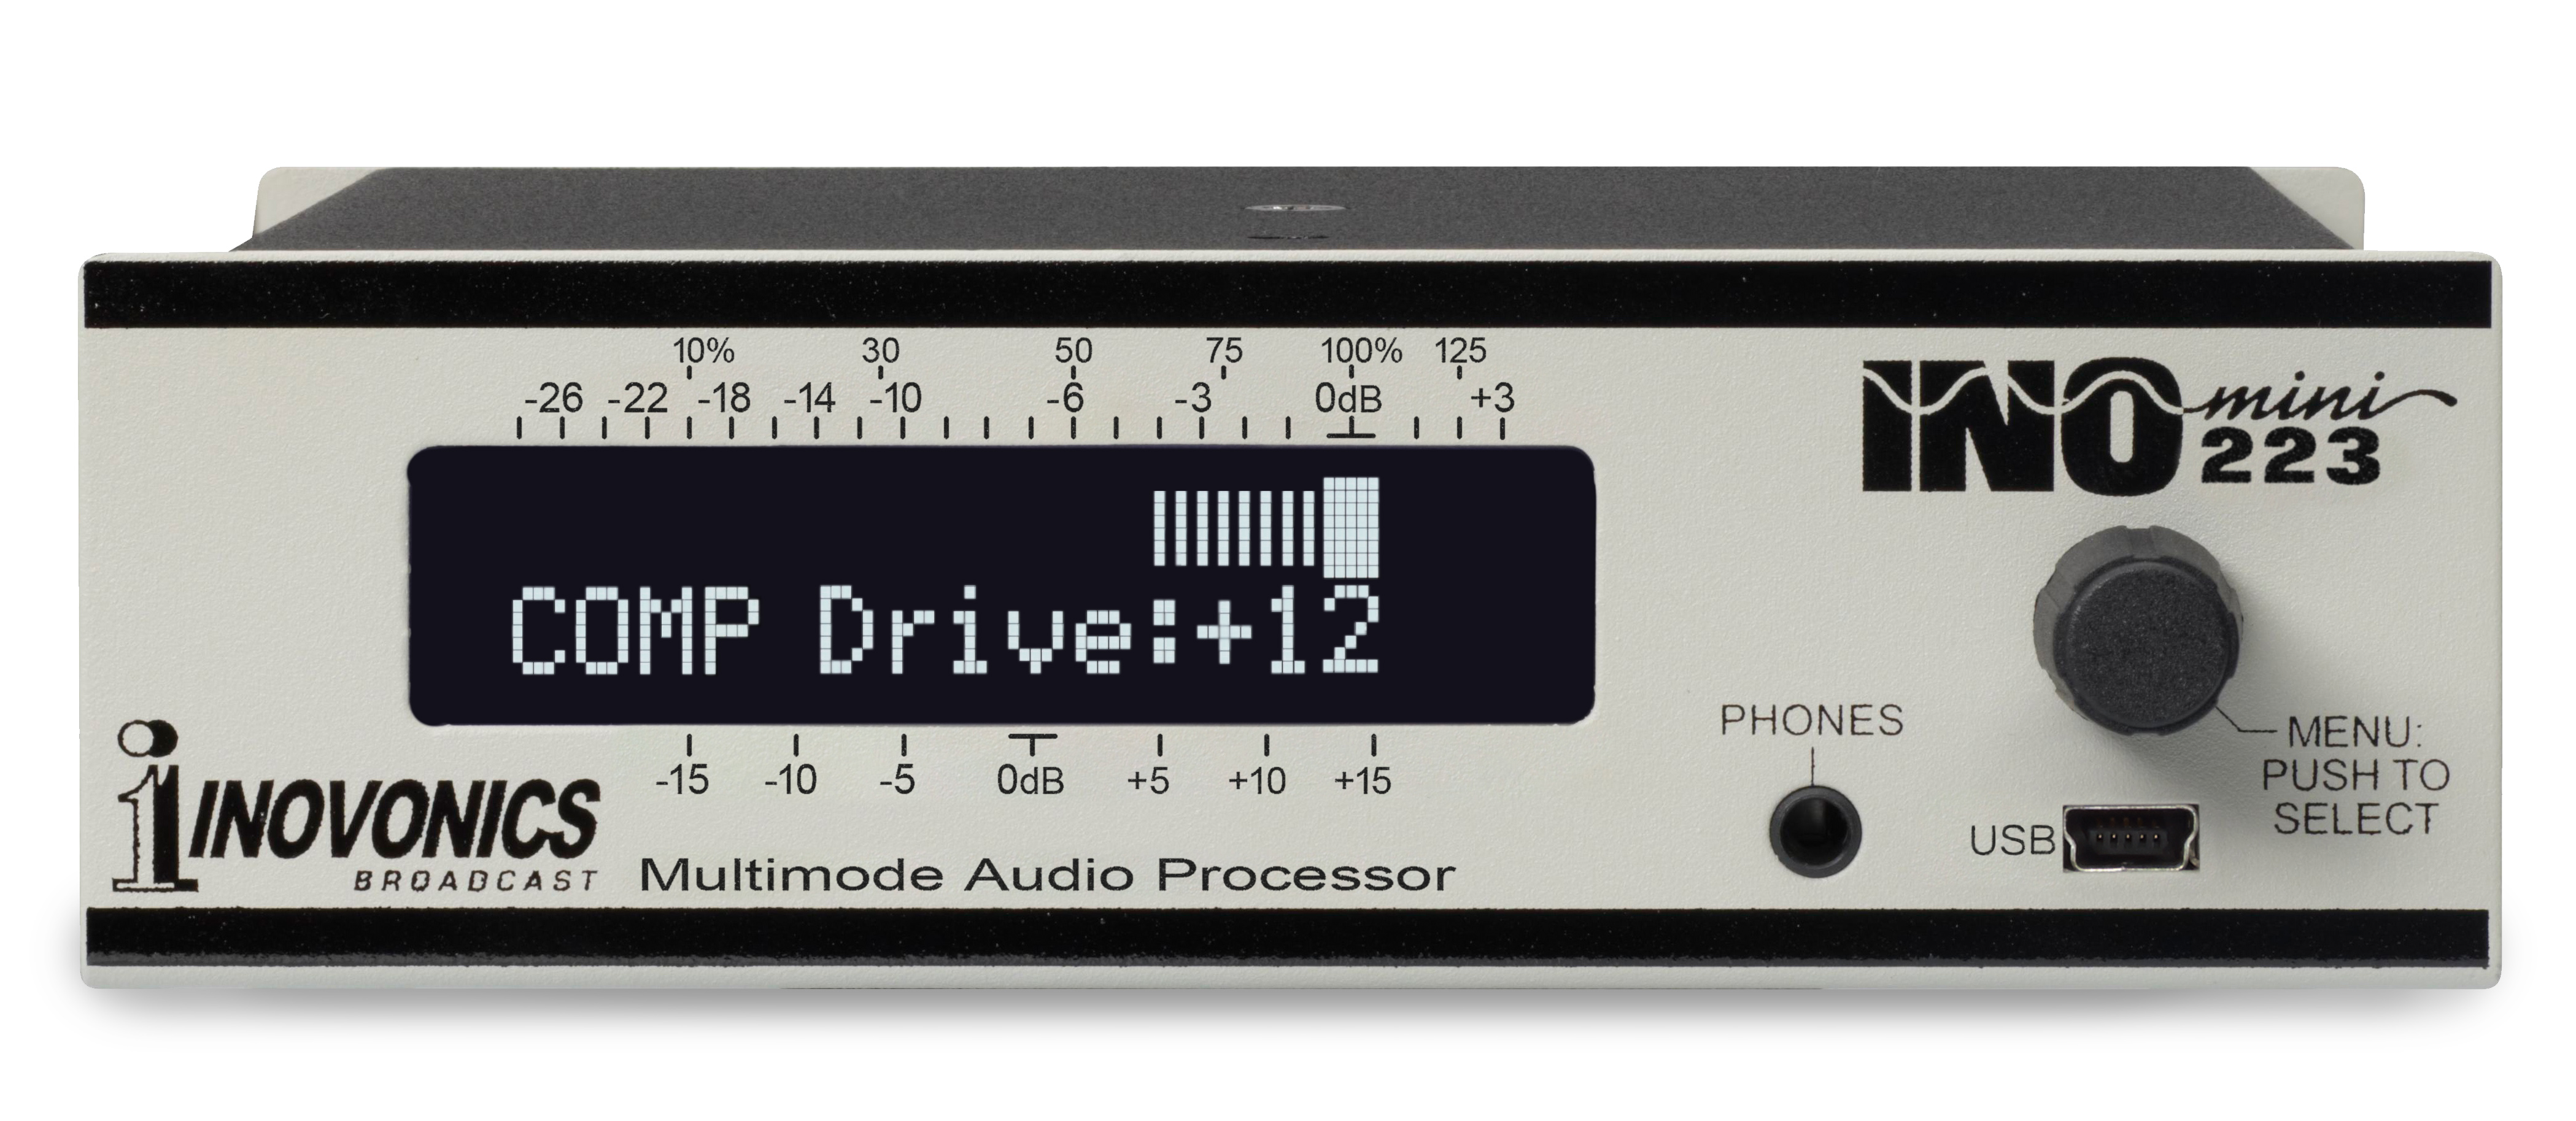 223 INOmini Inovonics Broadcast Multimodal Audio Processeur AM - BMI